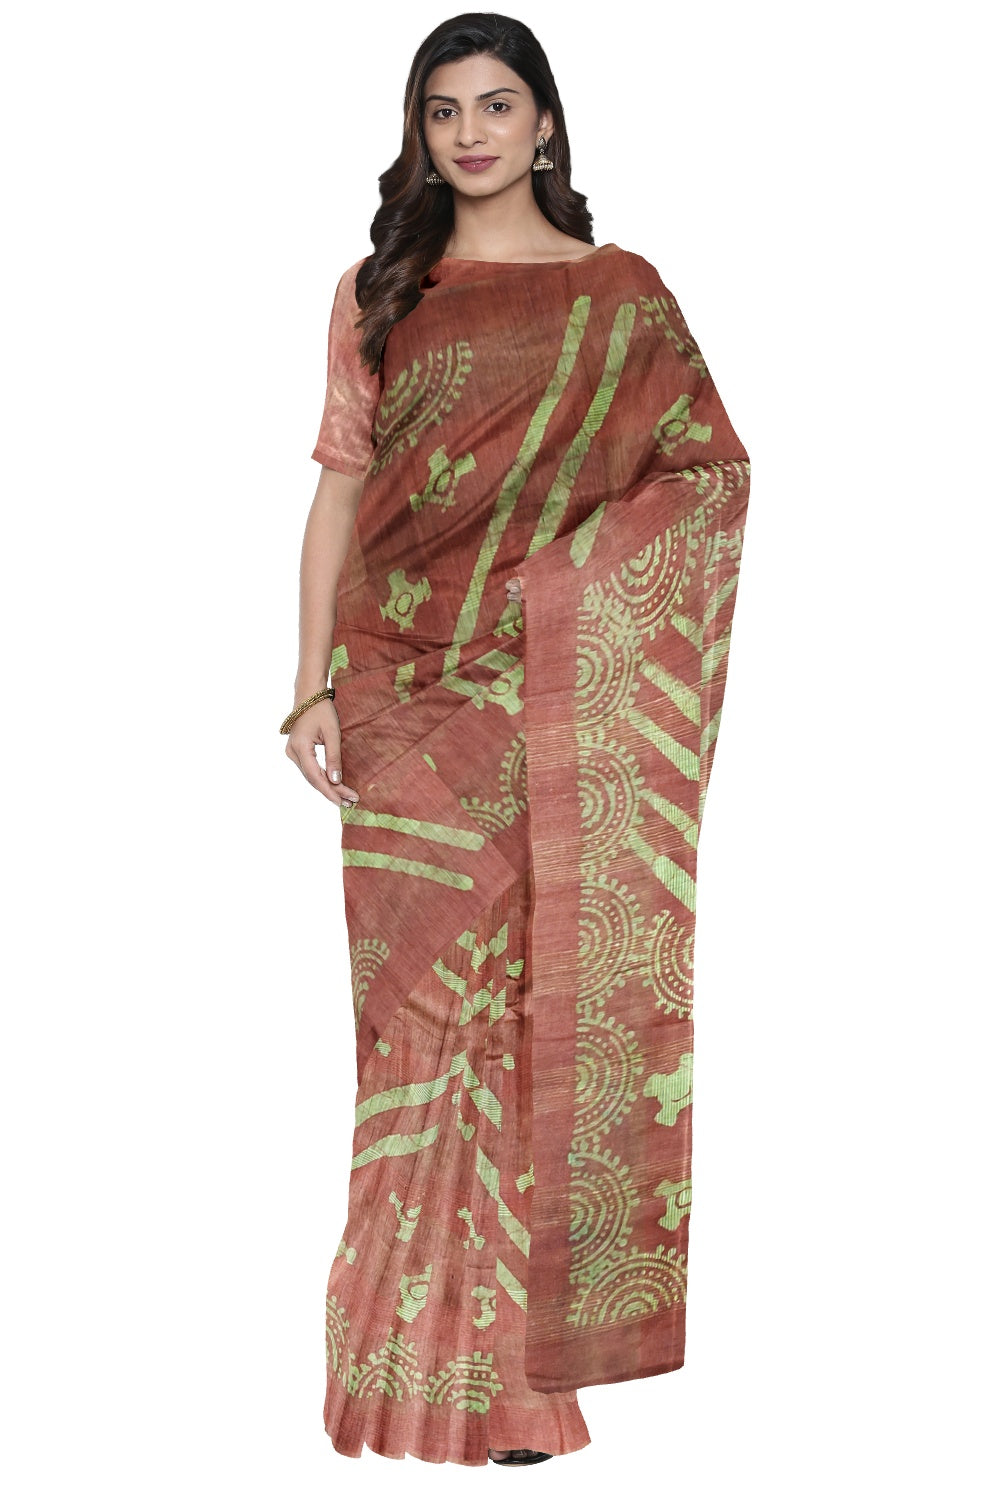 Southloom Cotton Designer Brown Saree with Baswara Print